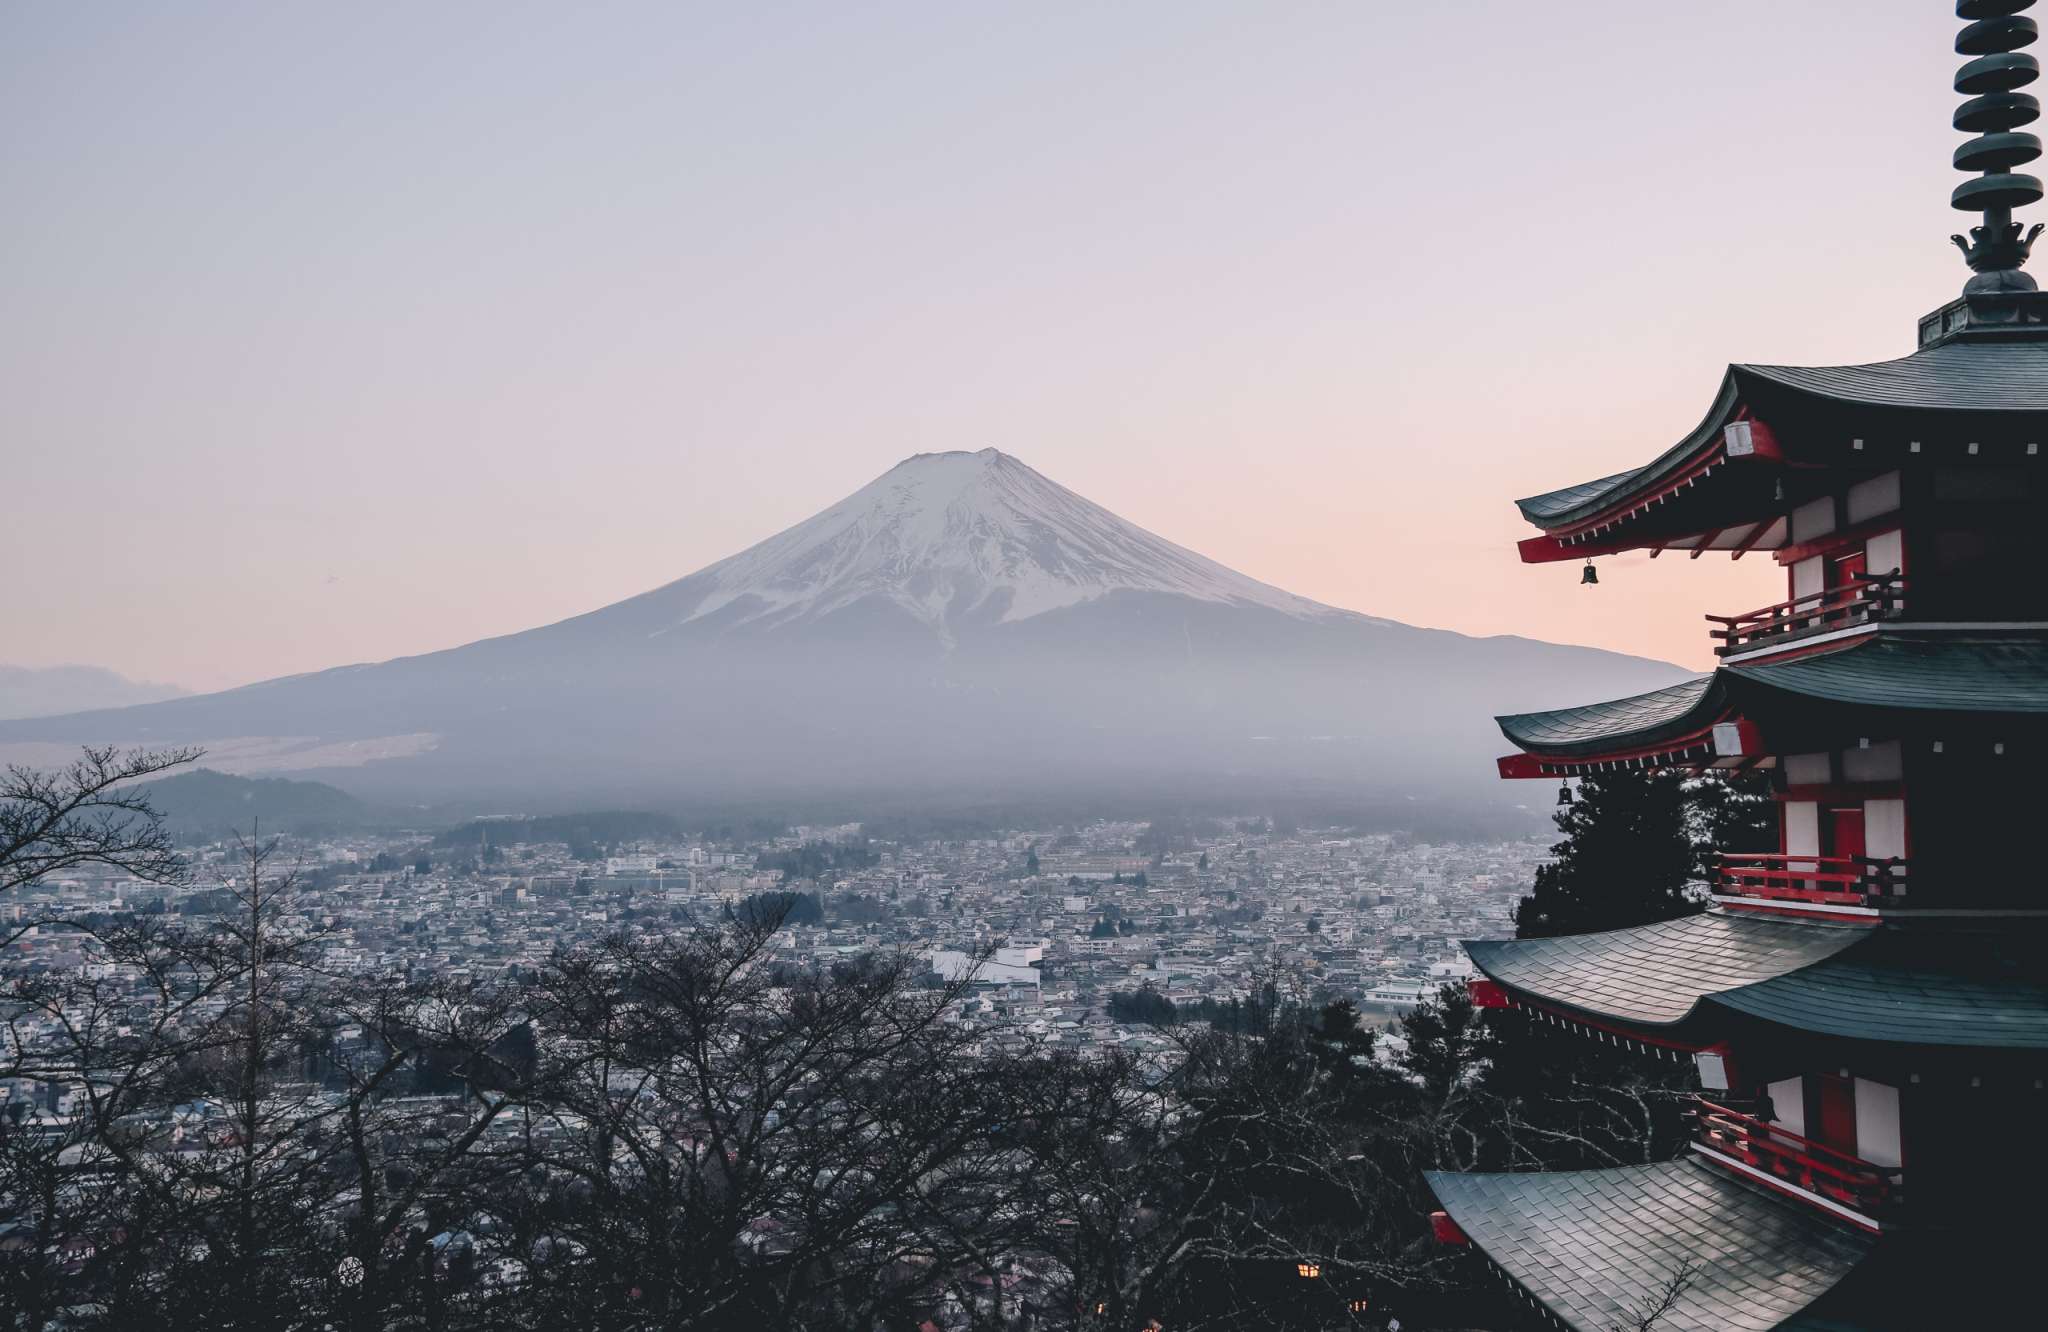 Kyoto and Mount Fuji.